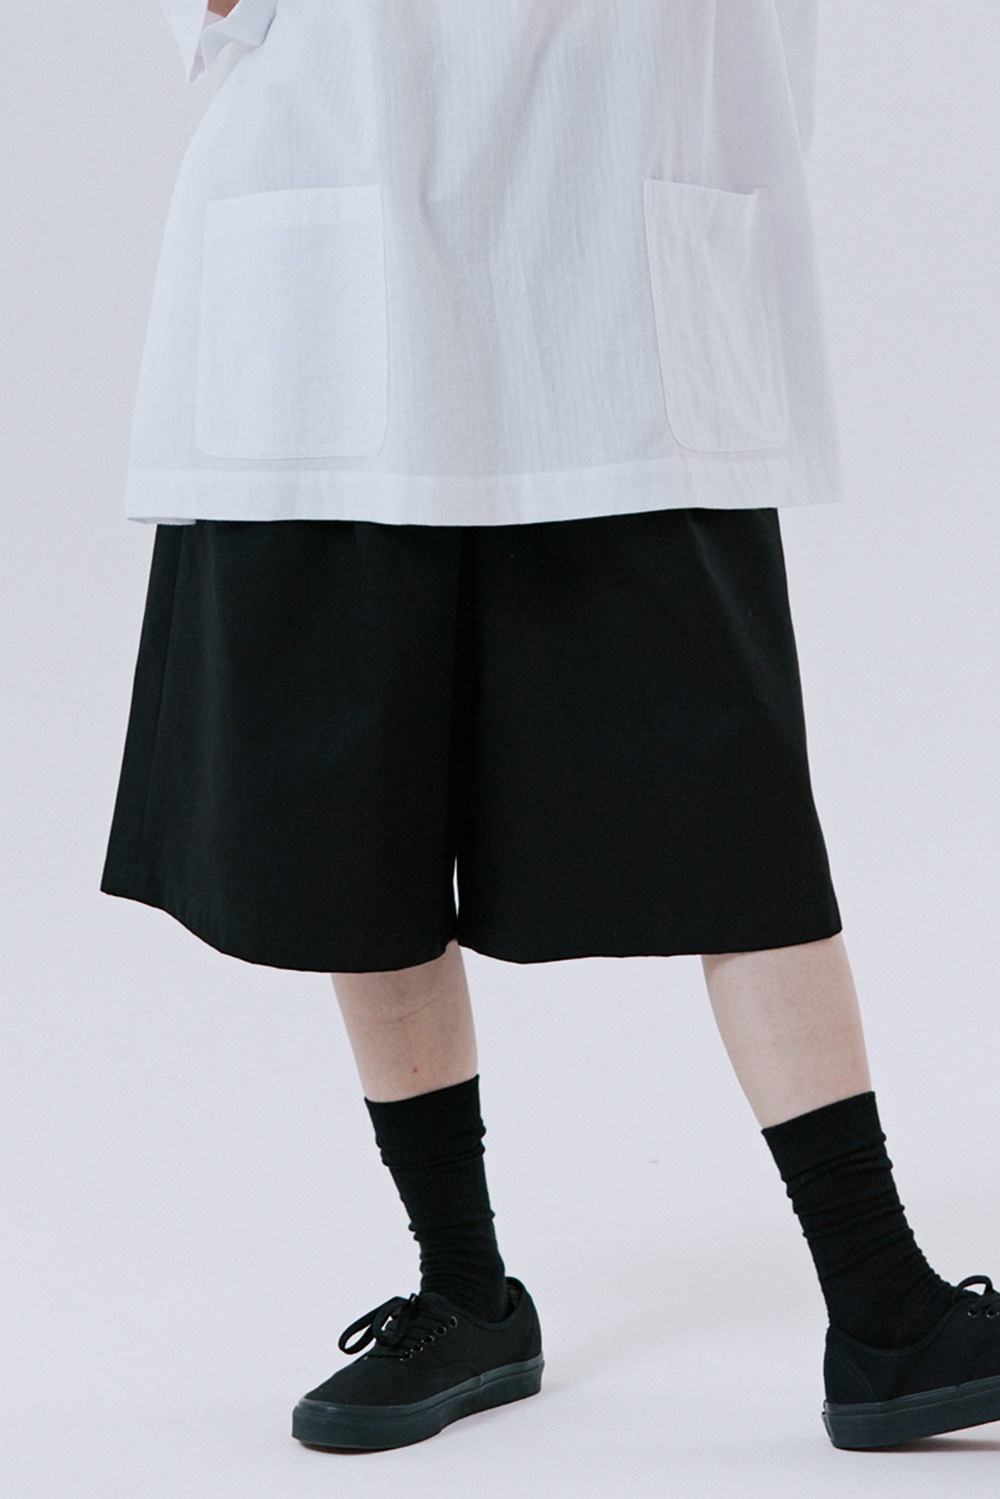 unisex Bermuda pants black [4color]